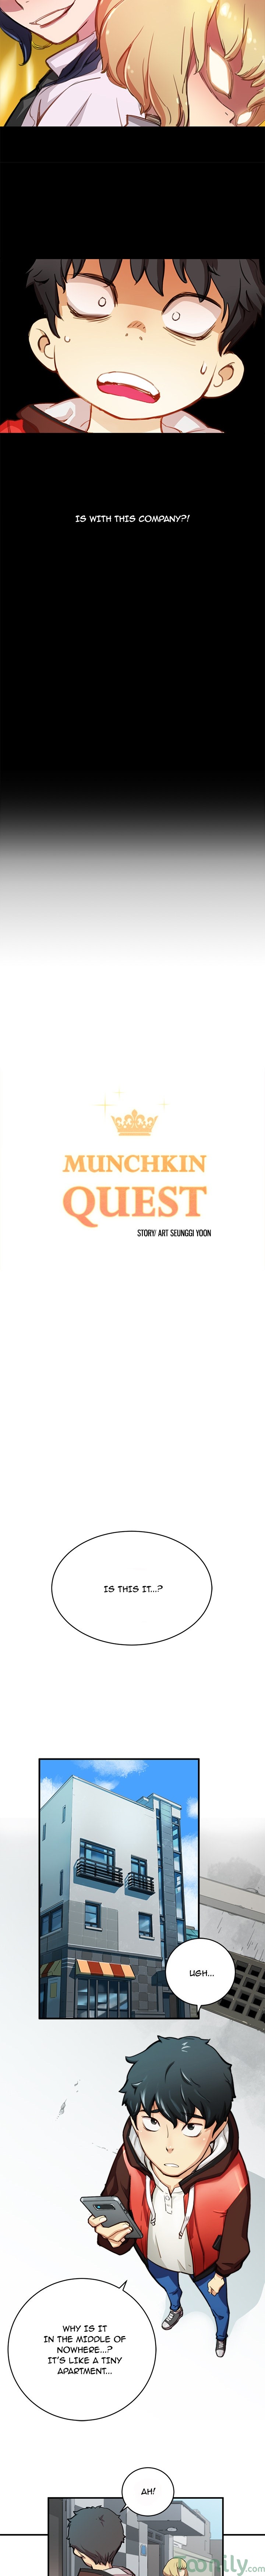 Munchkin Quest image